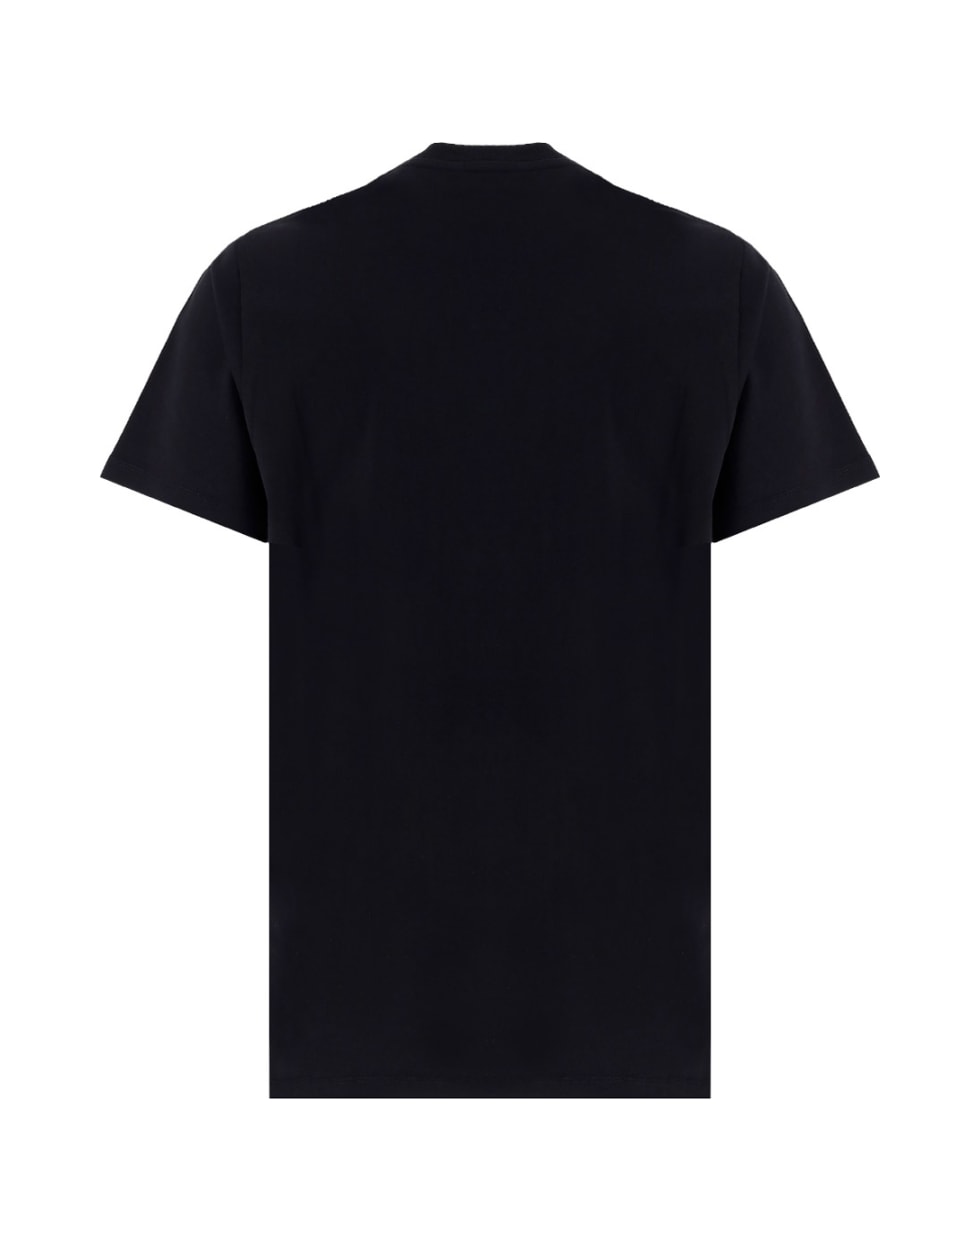 FourTwoFour on Fairfax 424 Inc T-shirt - Black